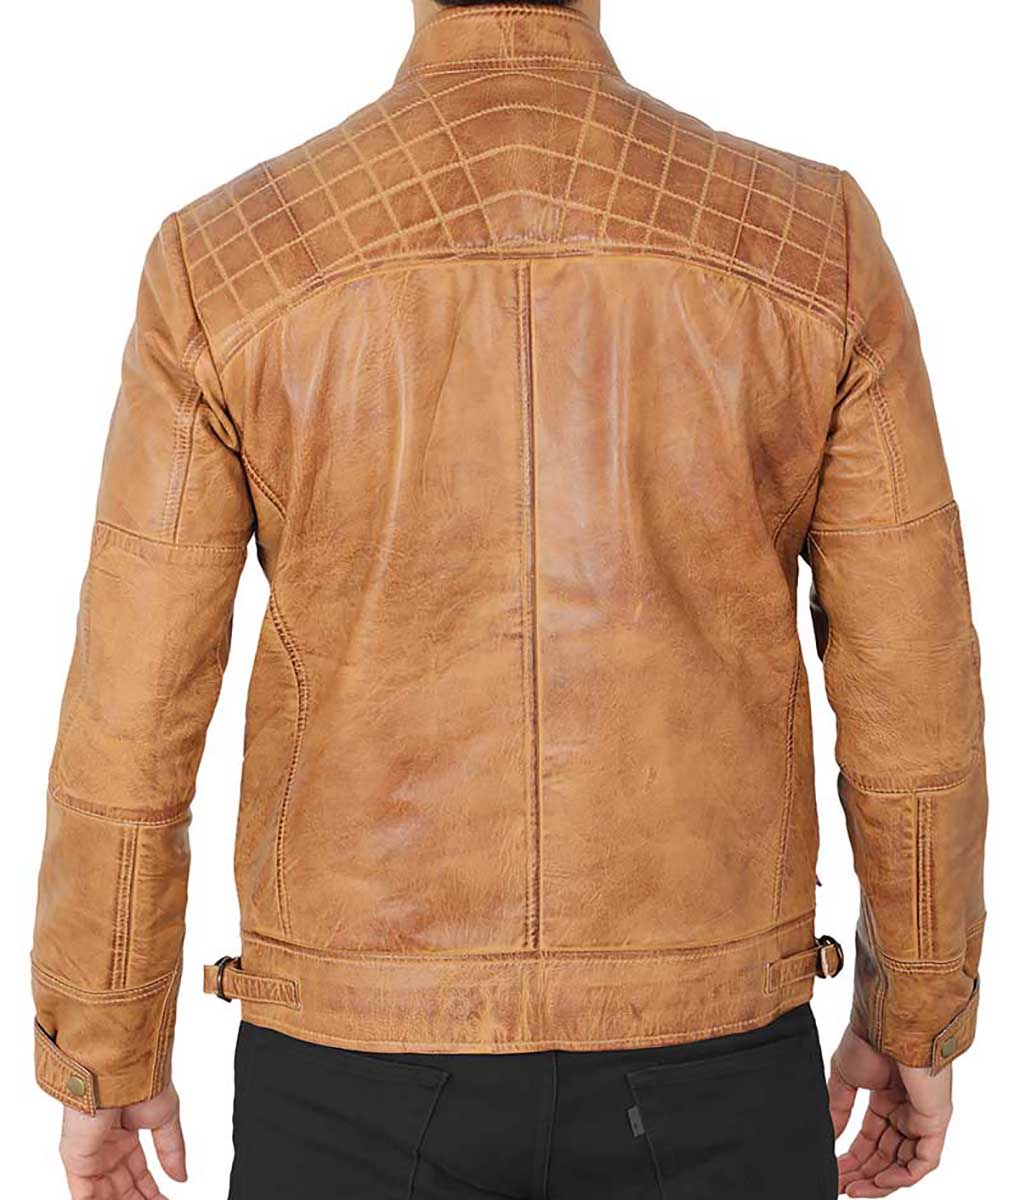 Joe Mens Camel Brown Distressed Leather Jacket